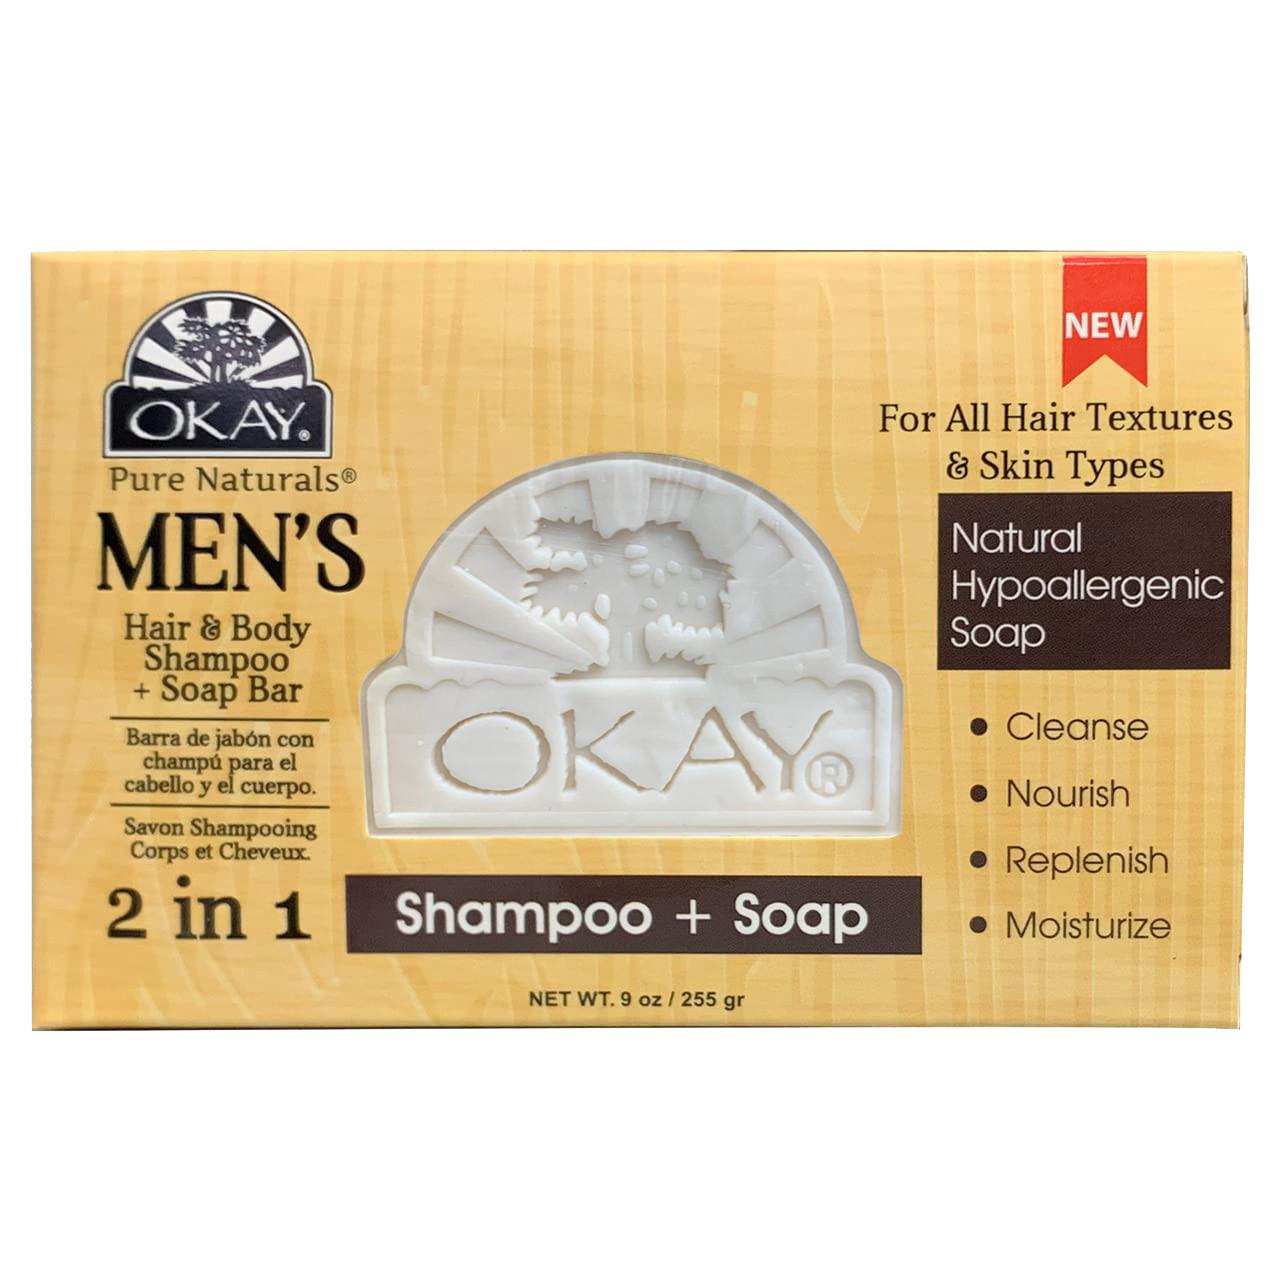 OKAY MEN'S TEAKWOOD SOAP BAR 9 oz/255 gr